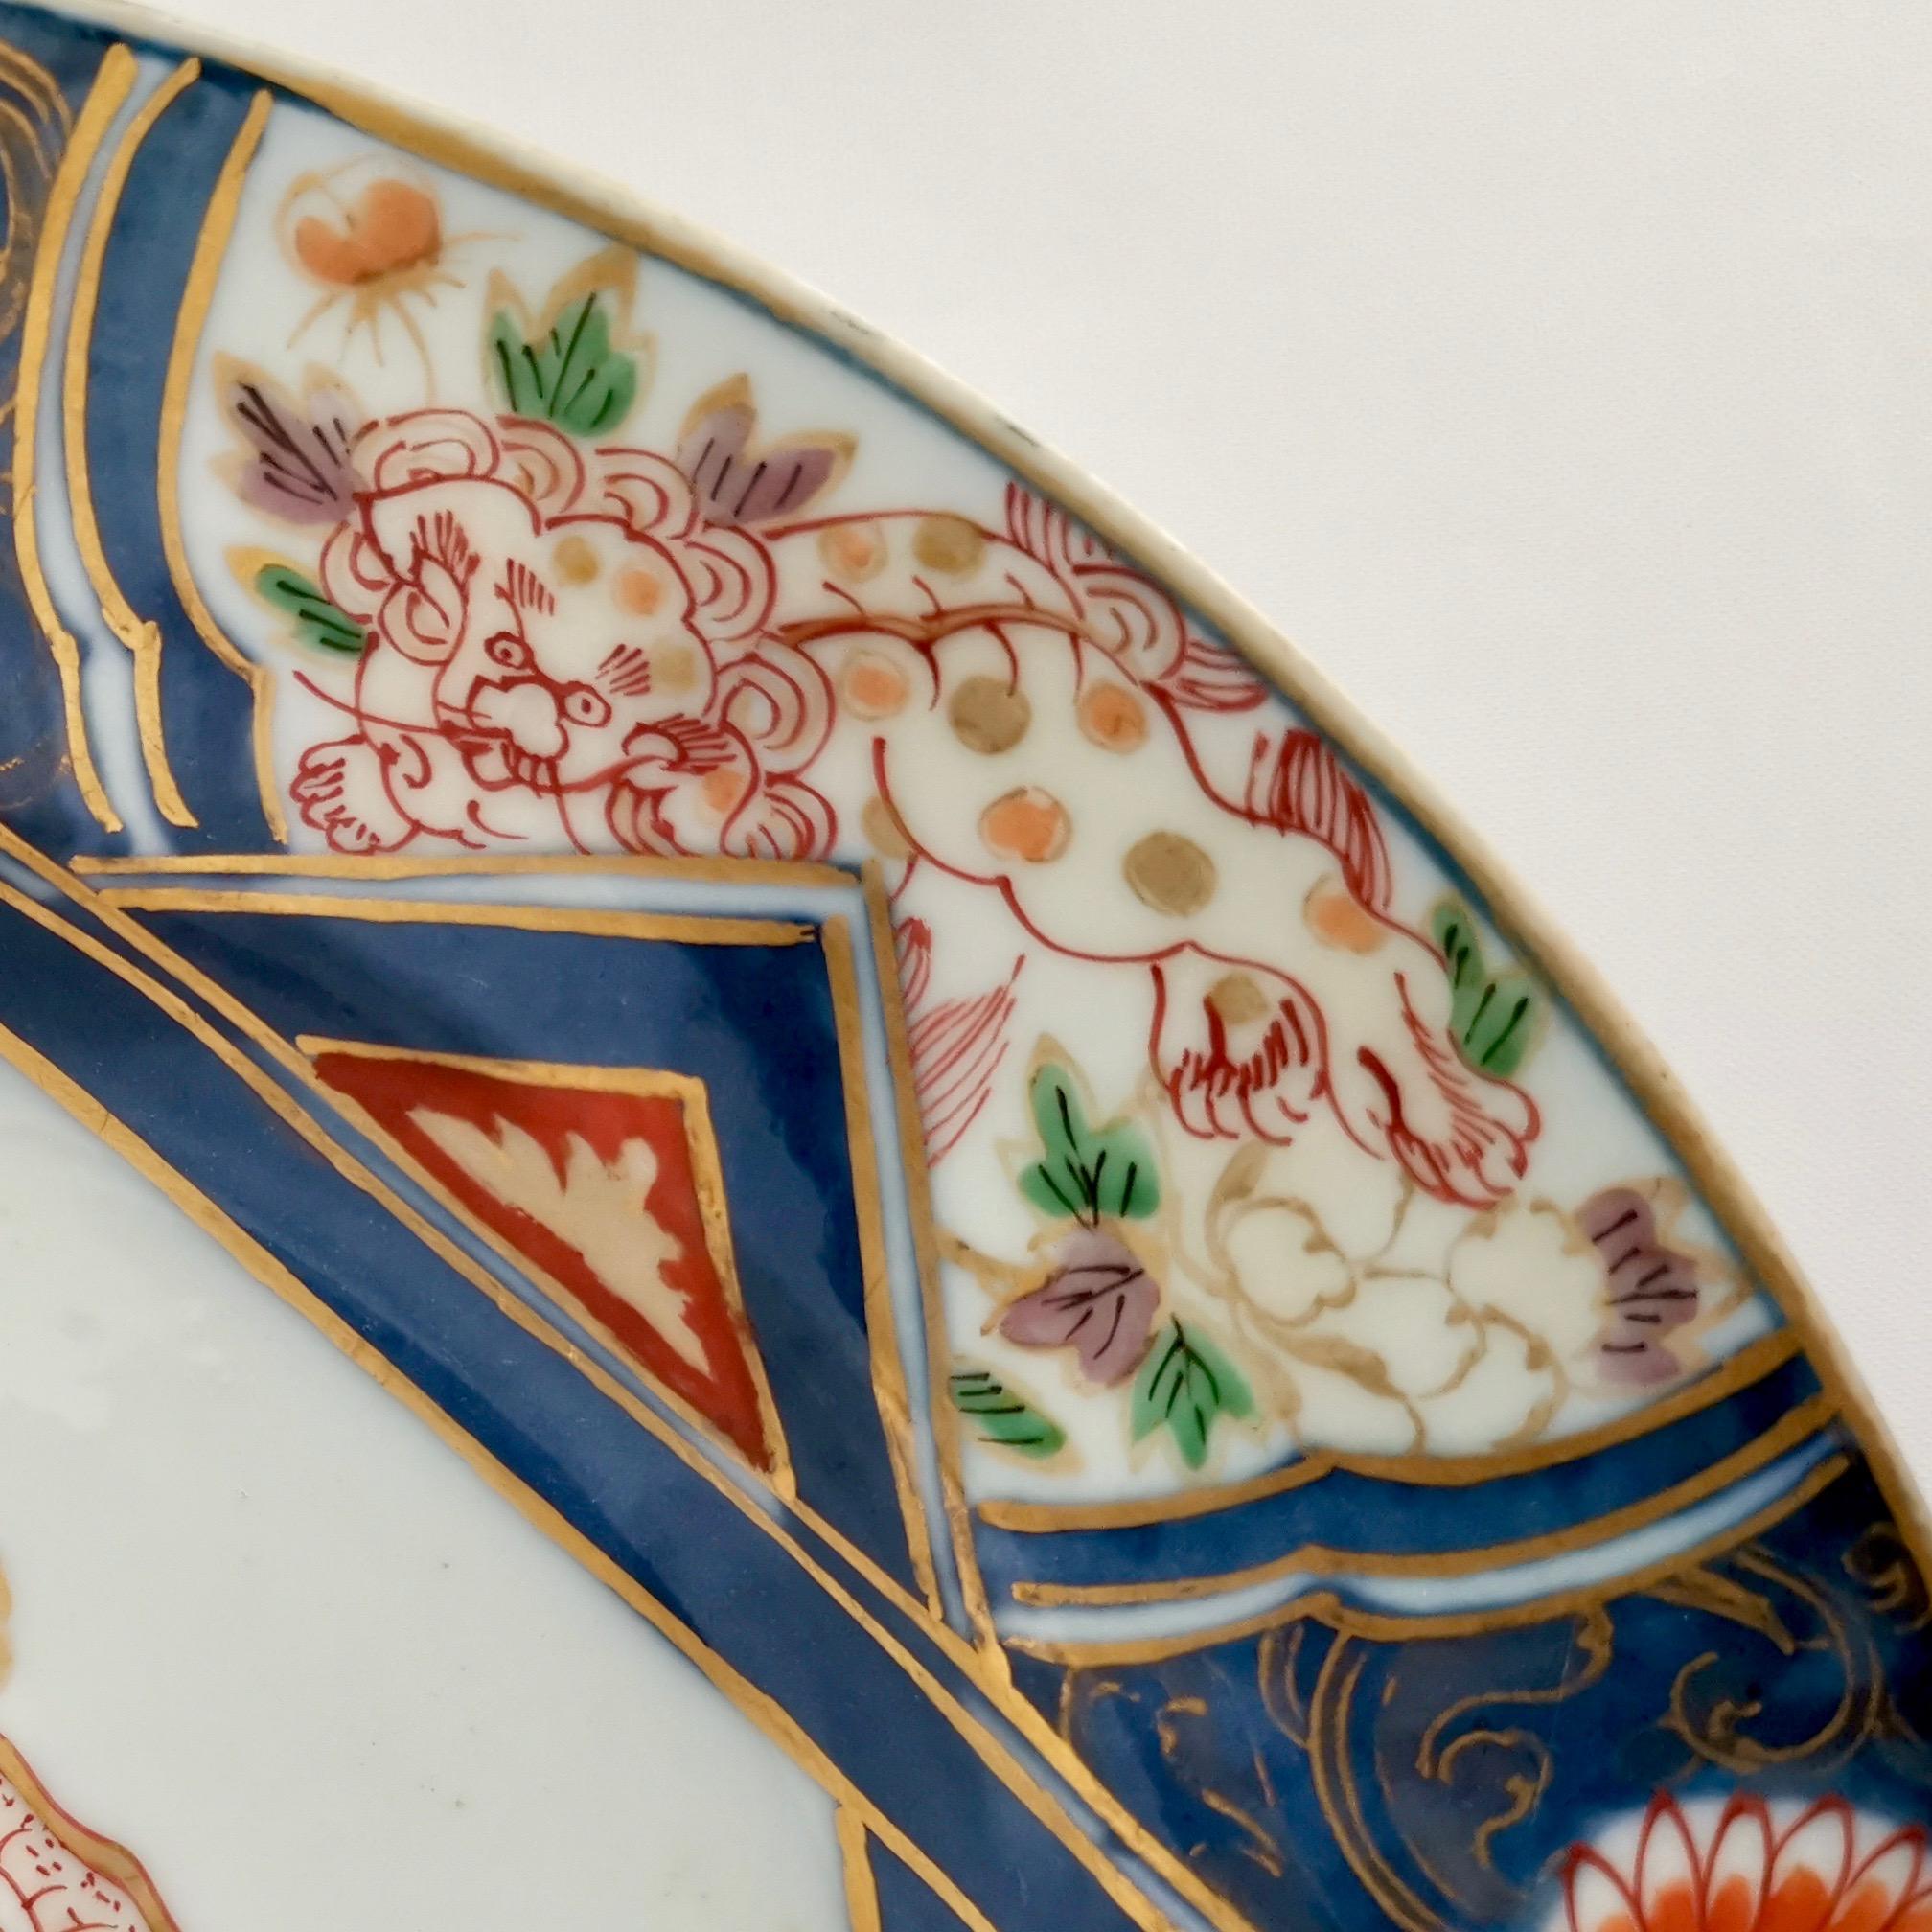 17th Century Japanese Imari Porcelain Plate with Dragon, Lions, Cranes, 17th C, Edo 1680-1700